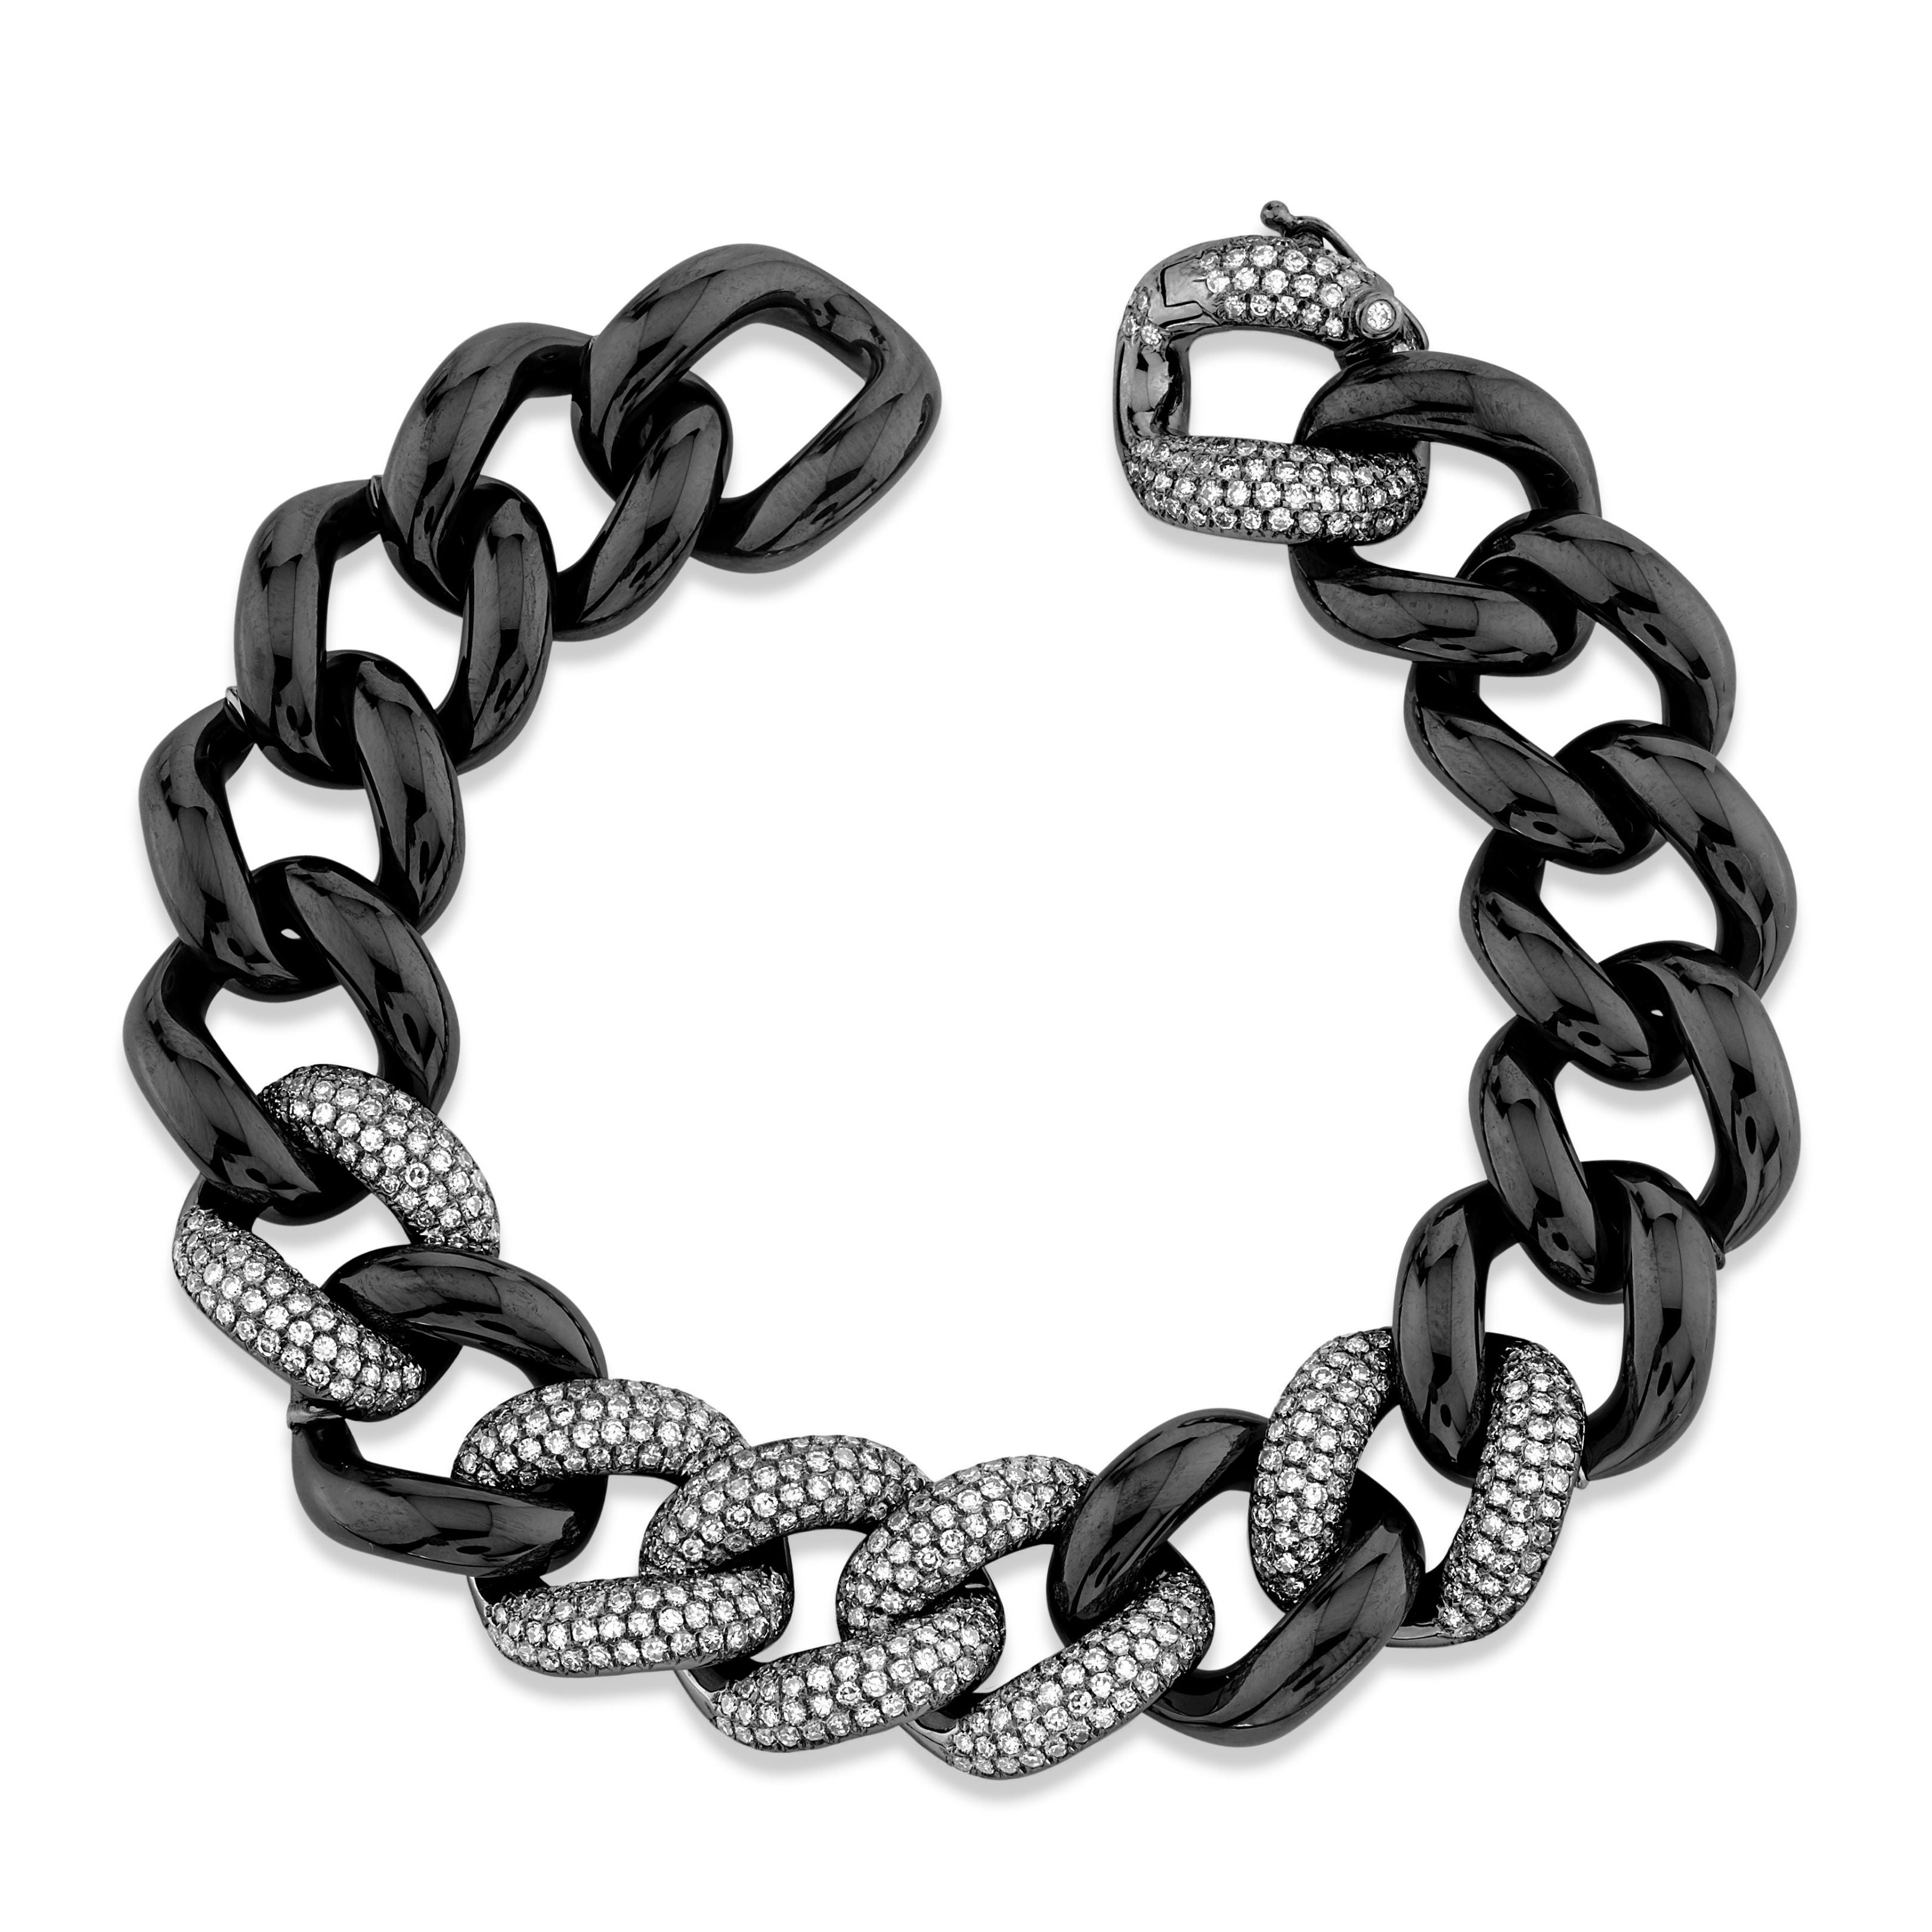 Stax Chain Link Bracelet in 18K White Gold with Diamonds, 4mm | David Yurman